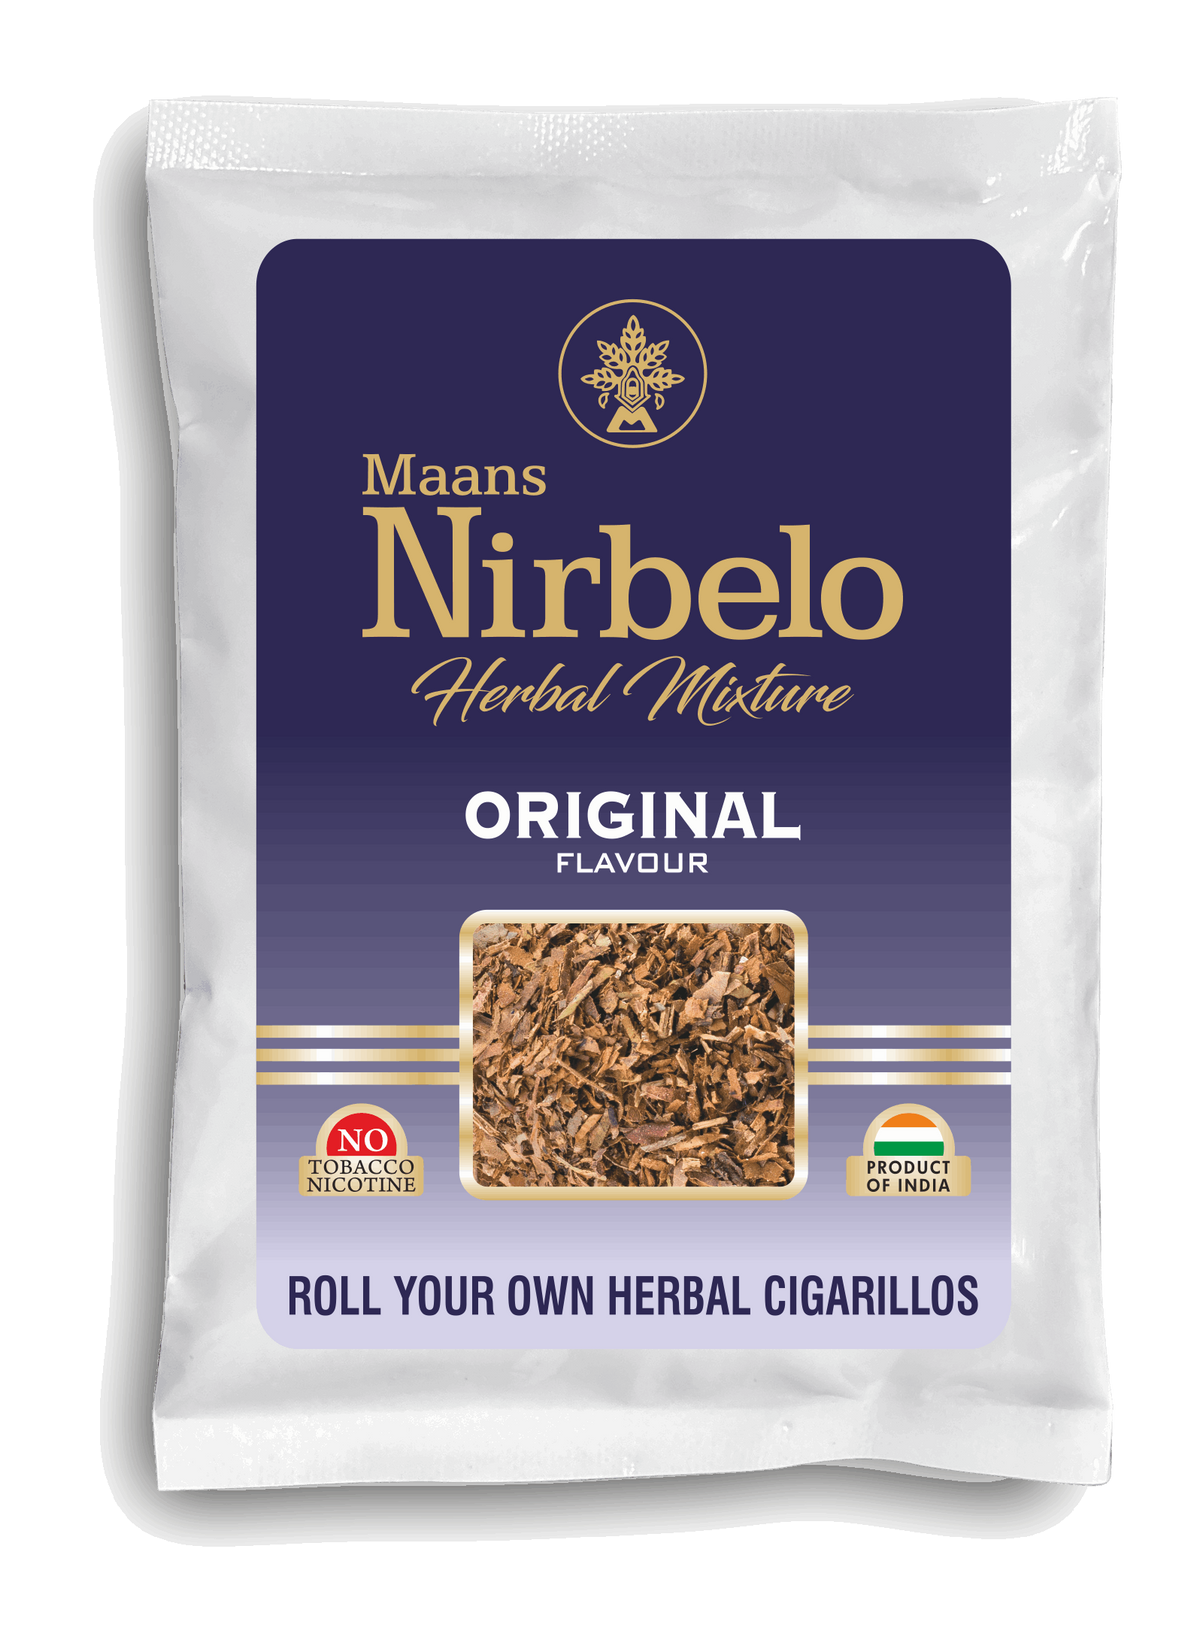 Nirbelo Herbal Raw Mixture Original Flavor 100% Tobacco Free & Nicotine Free Natural Organic Ingredients for Quit Smoking & Nature's Alternative to Tobacco